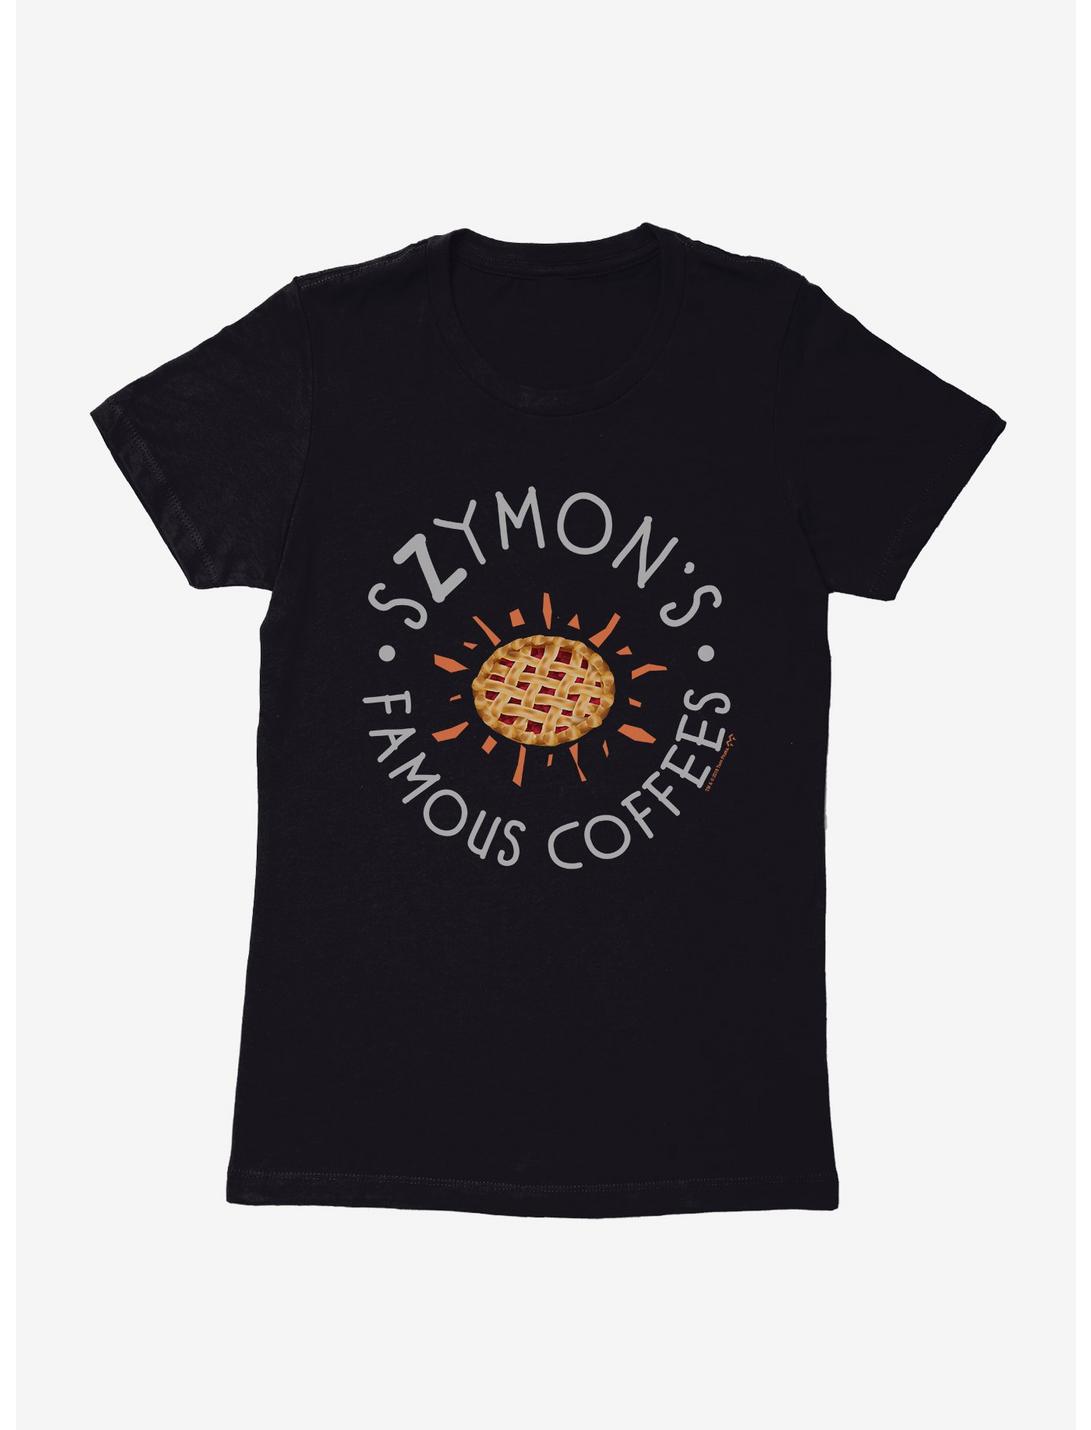 Twin Peaks Szymon's Famous Icon Womens T-Shirt, BLACK, hi-res